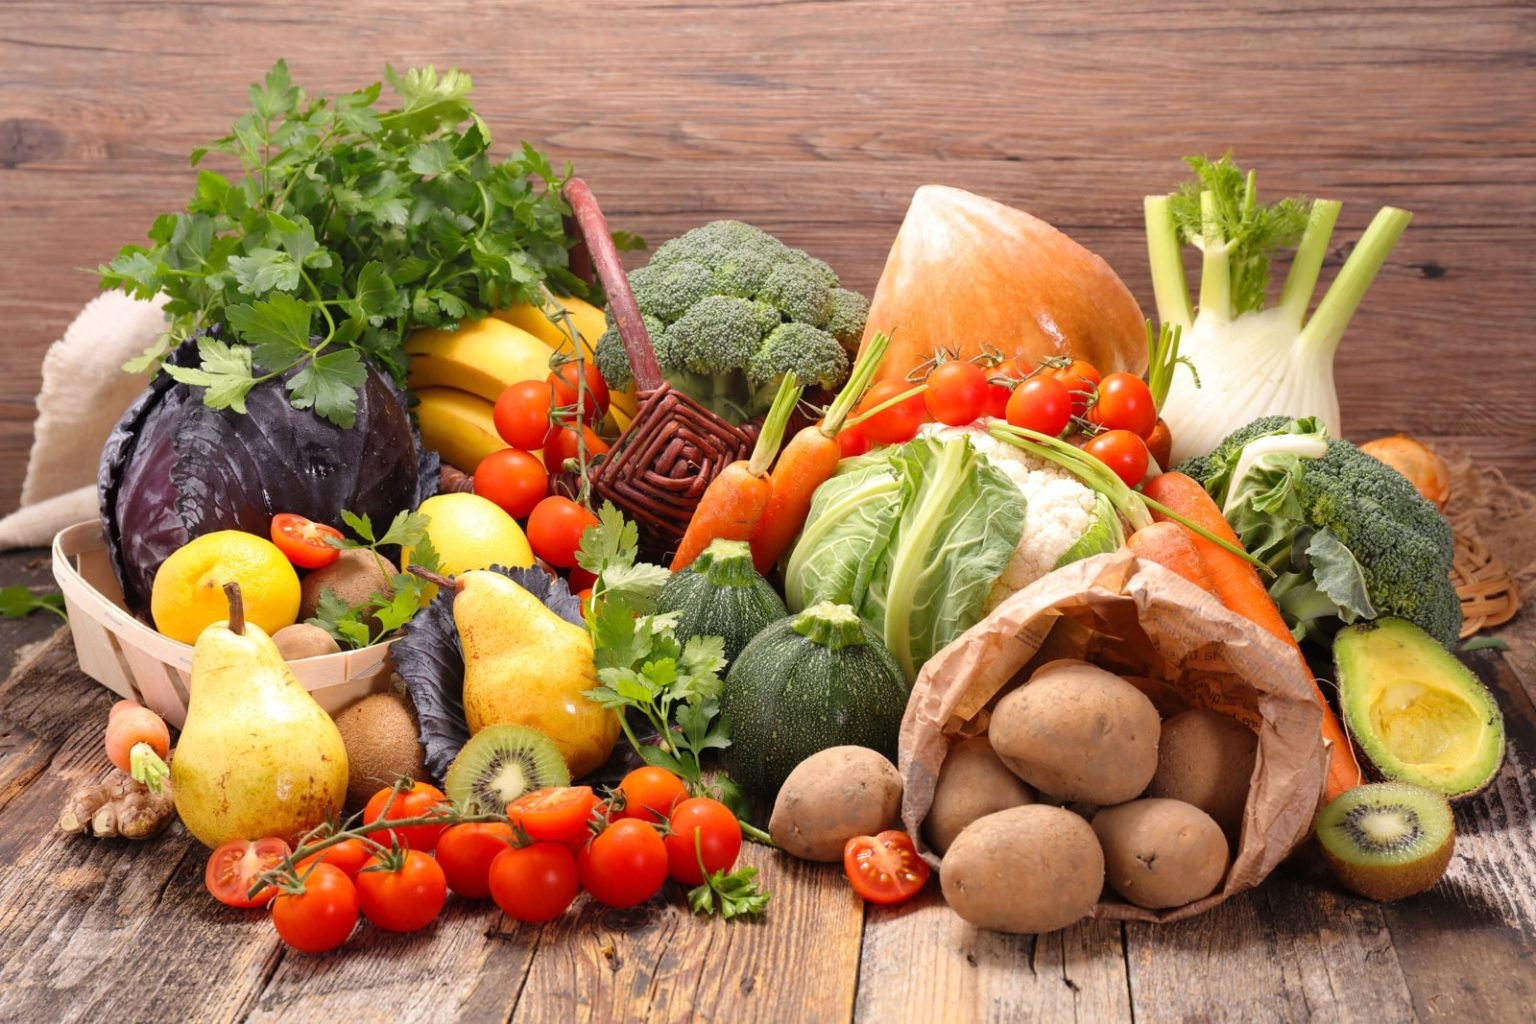 Vegetable products. Овощи и фрукты. Продукты овощи. Фрукт. Овощи разные.